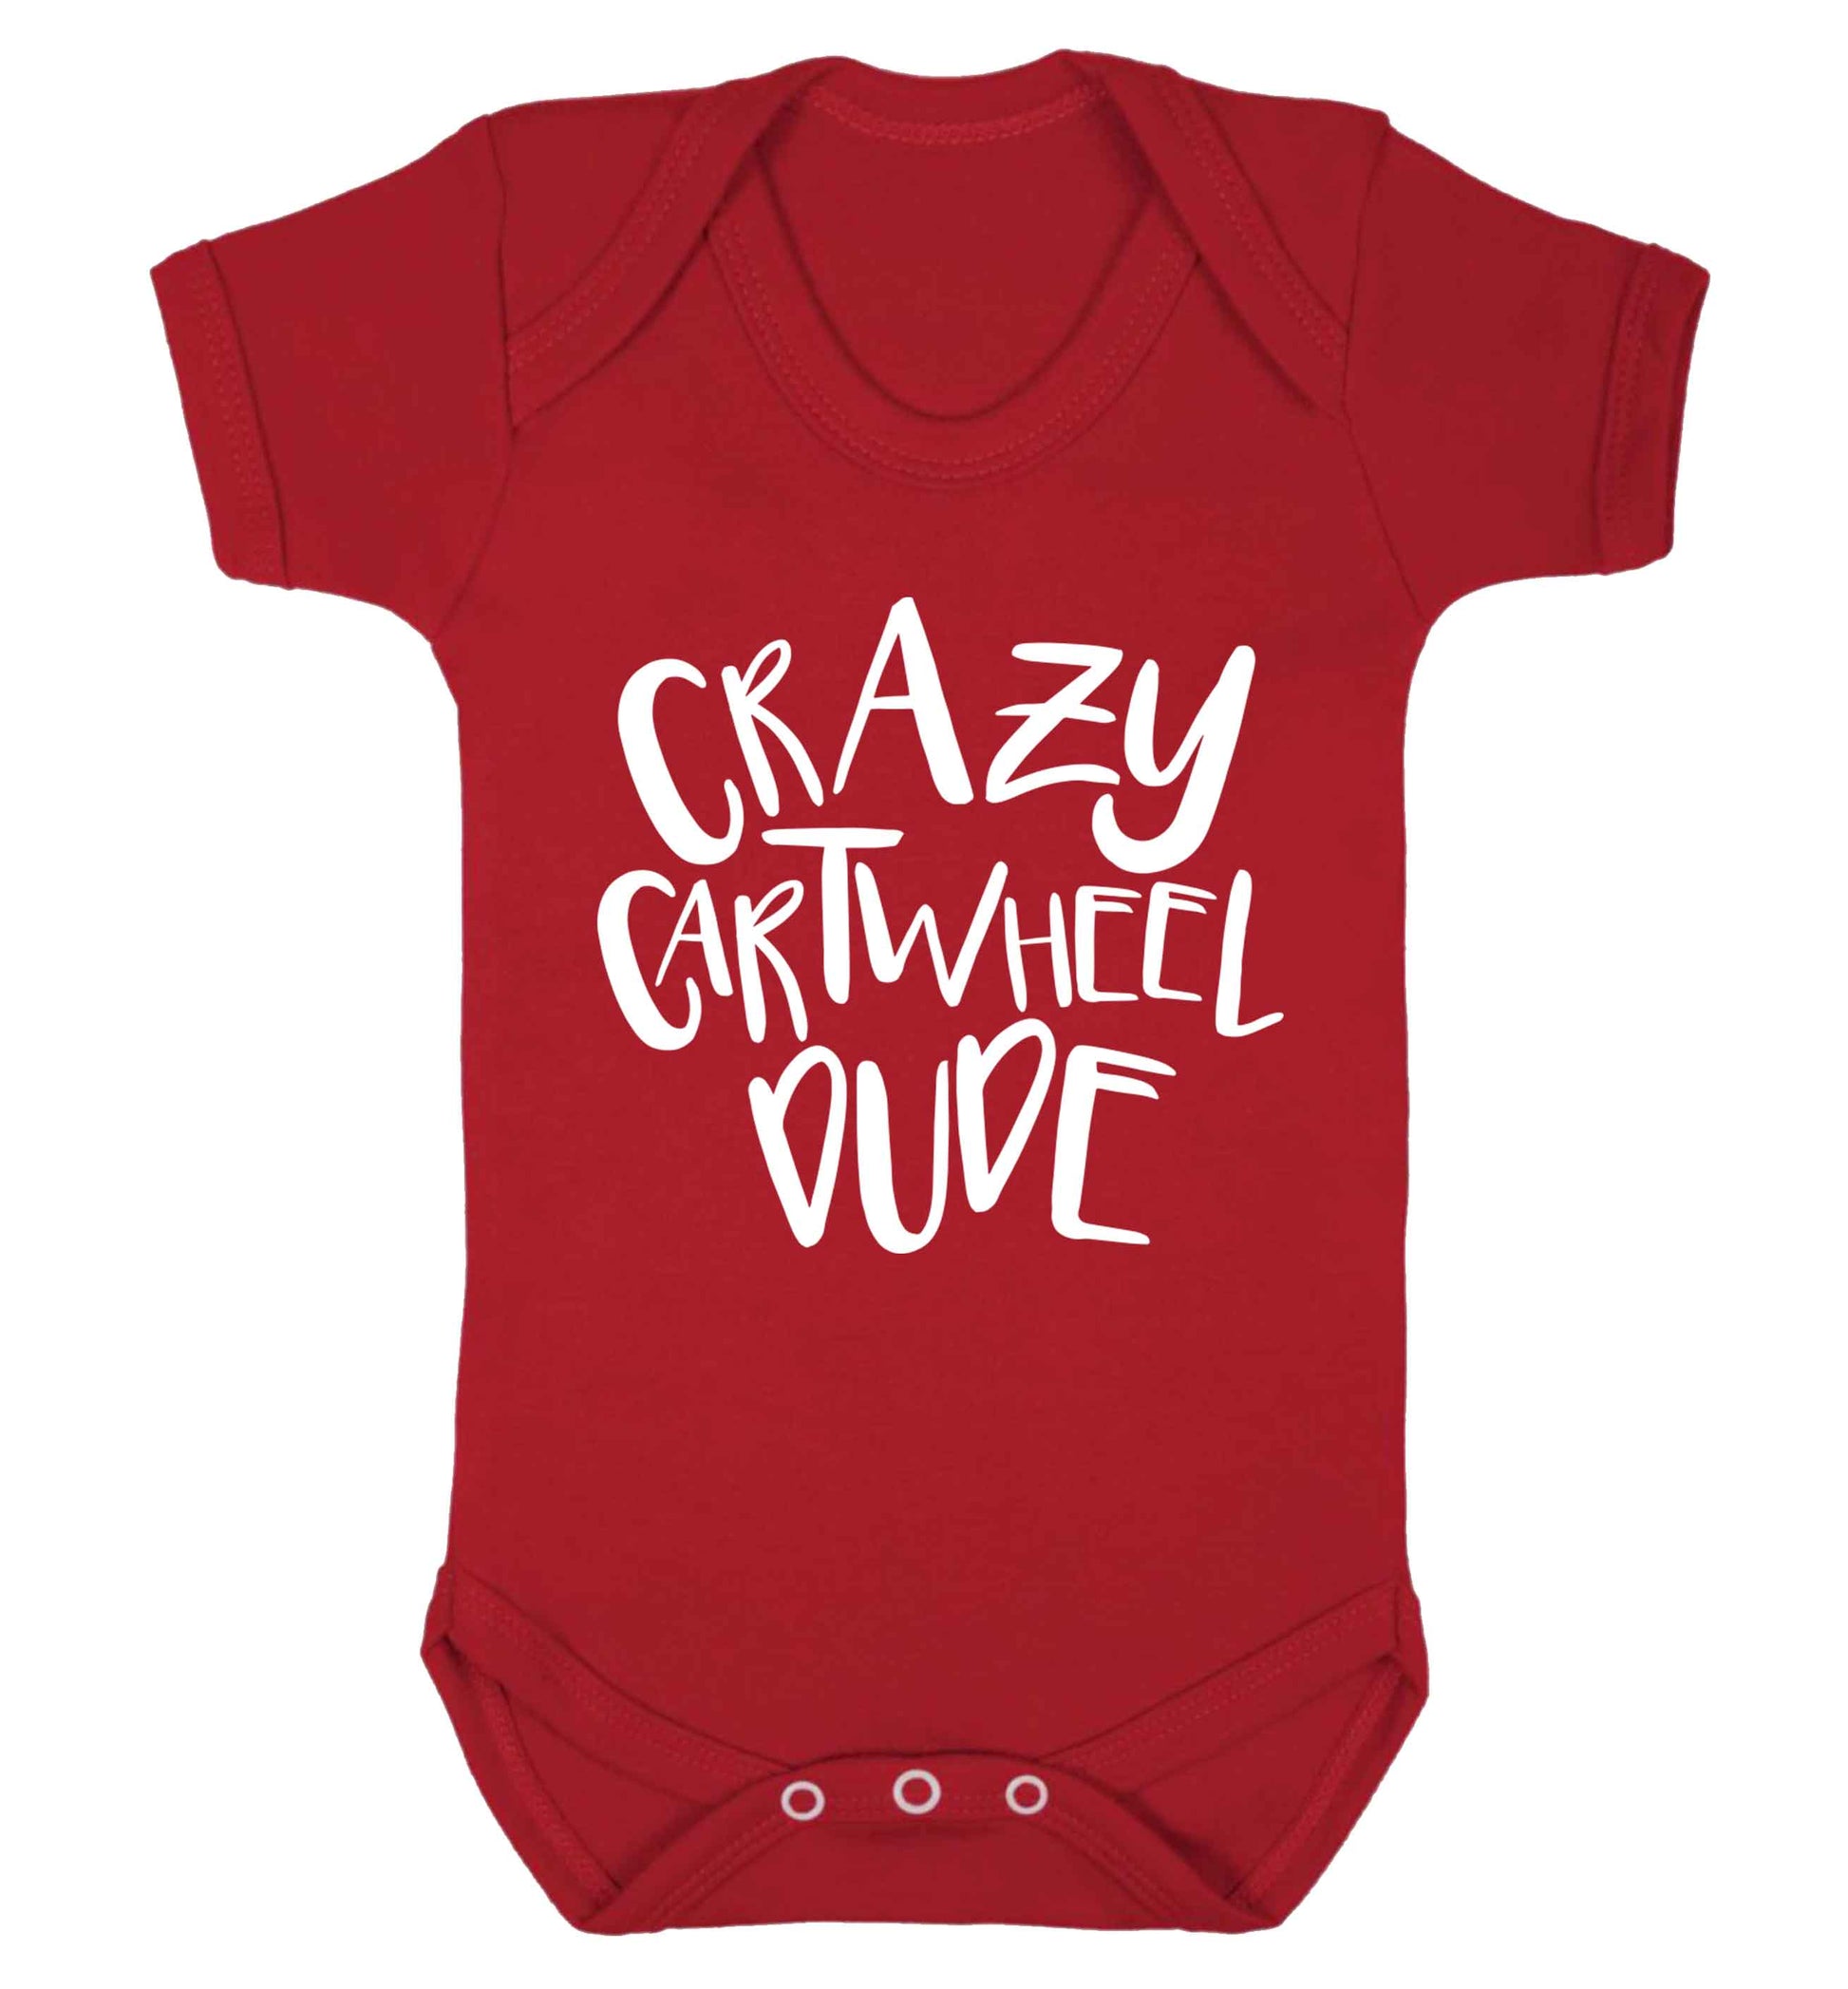 Crazy cartwheel dude Baby Vest red 18-24 months